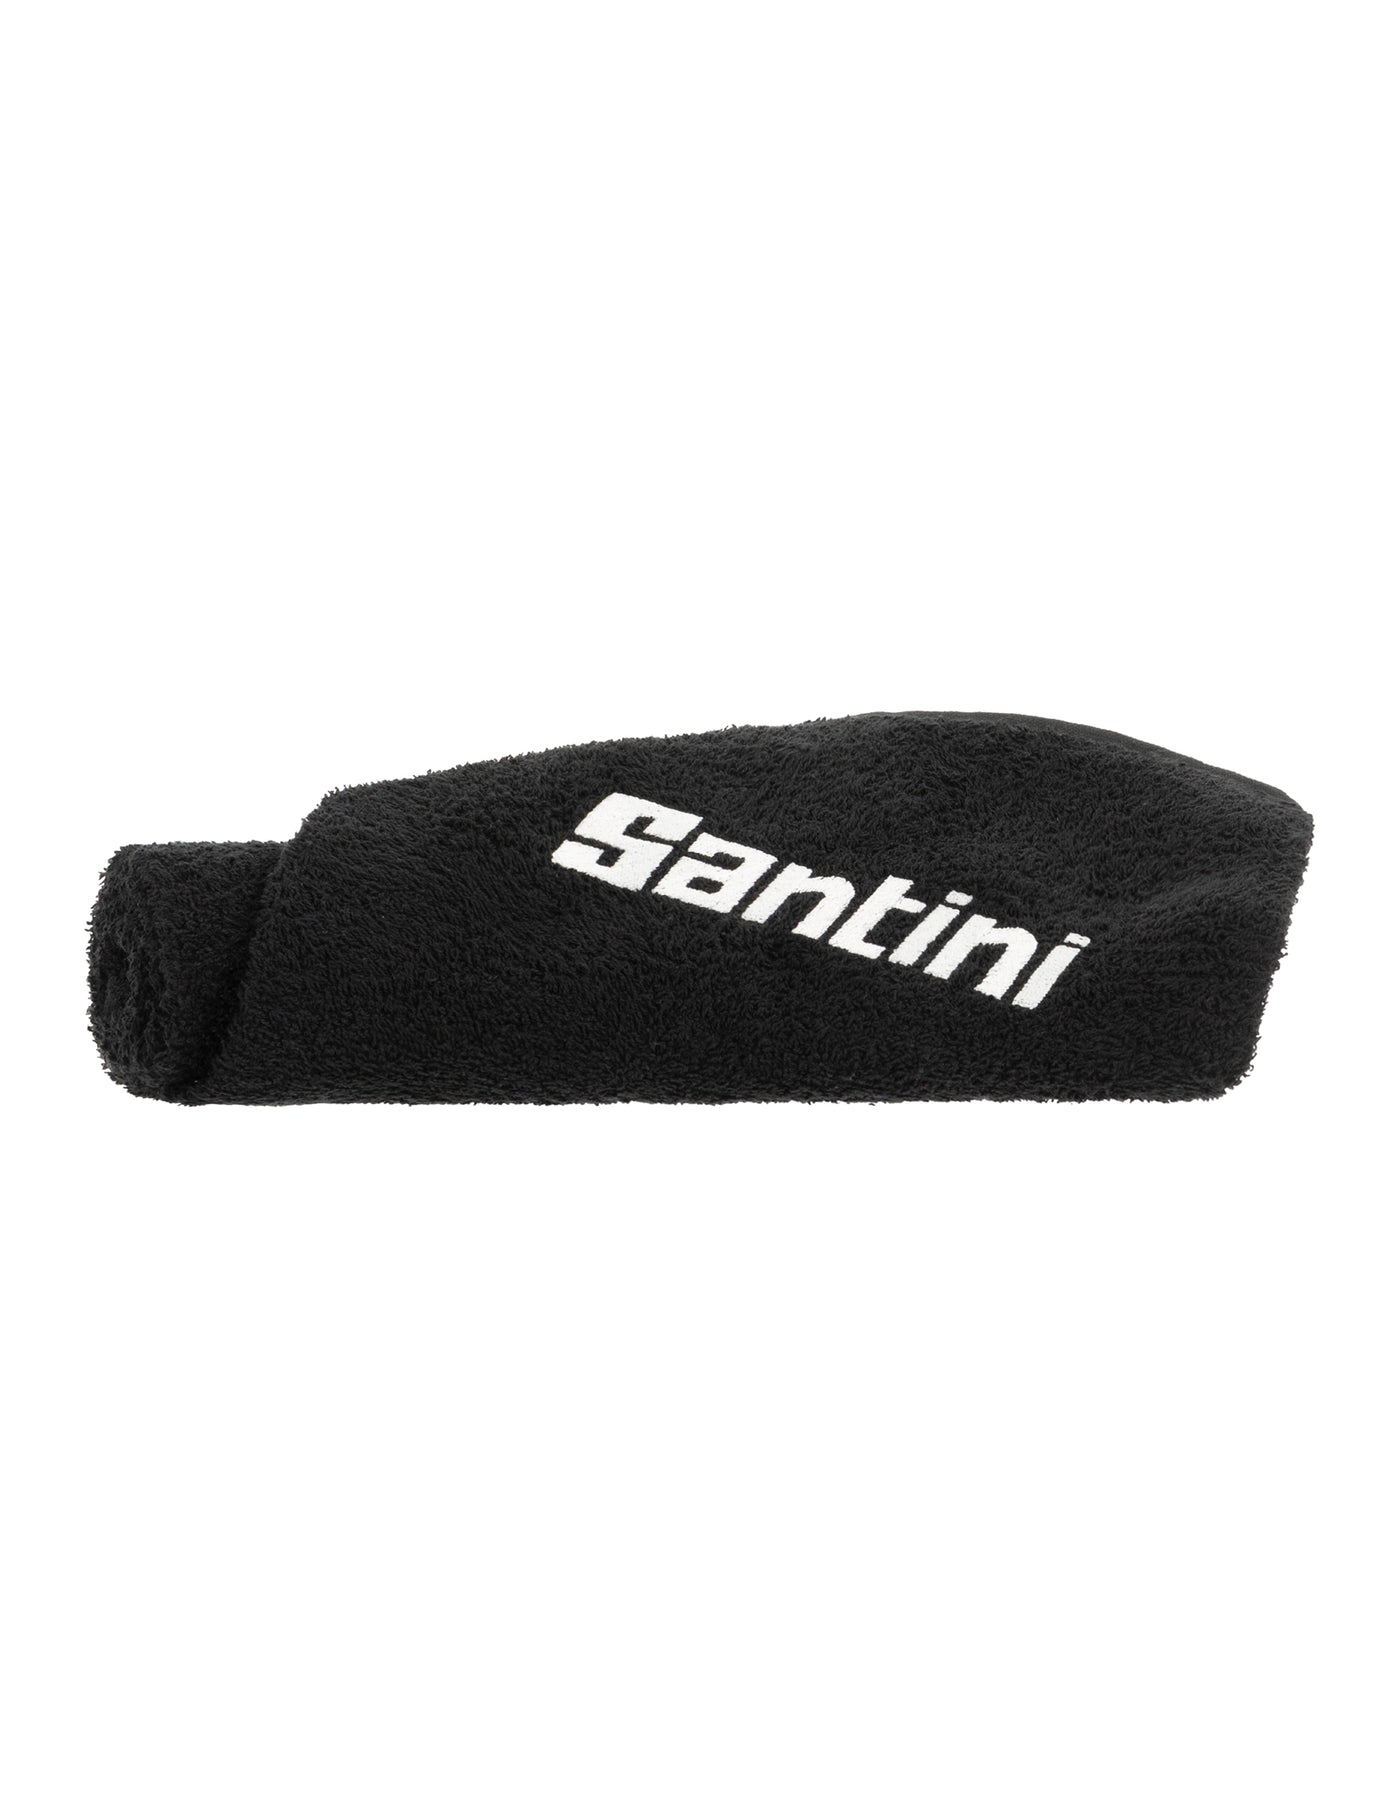 Santini Forza Indoor Cycling Towel (Black)